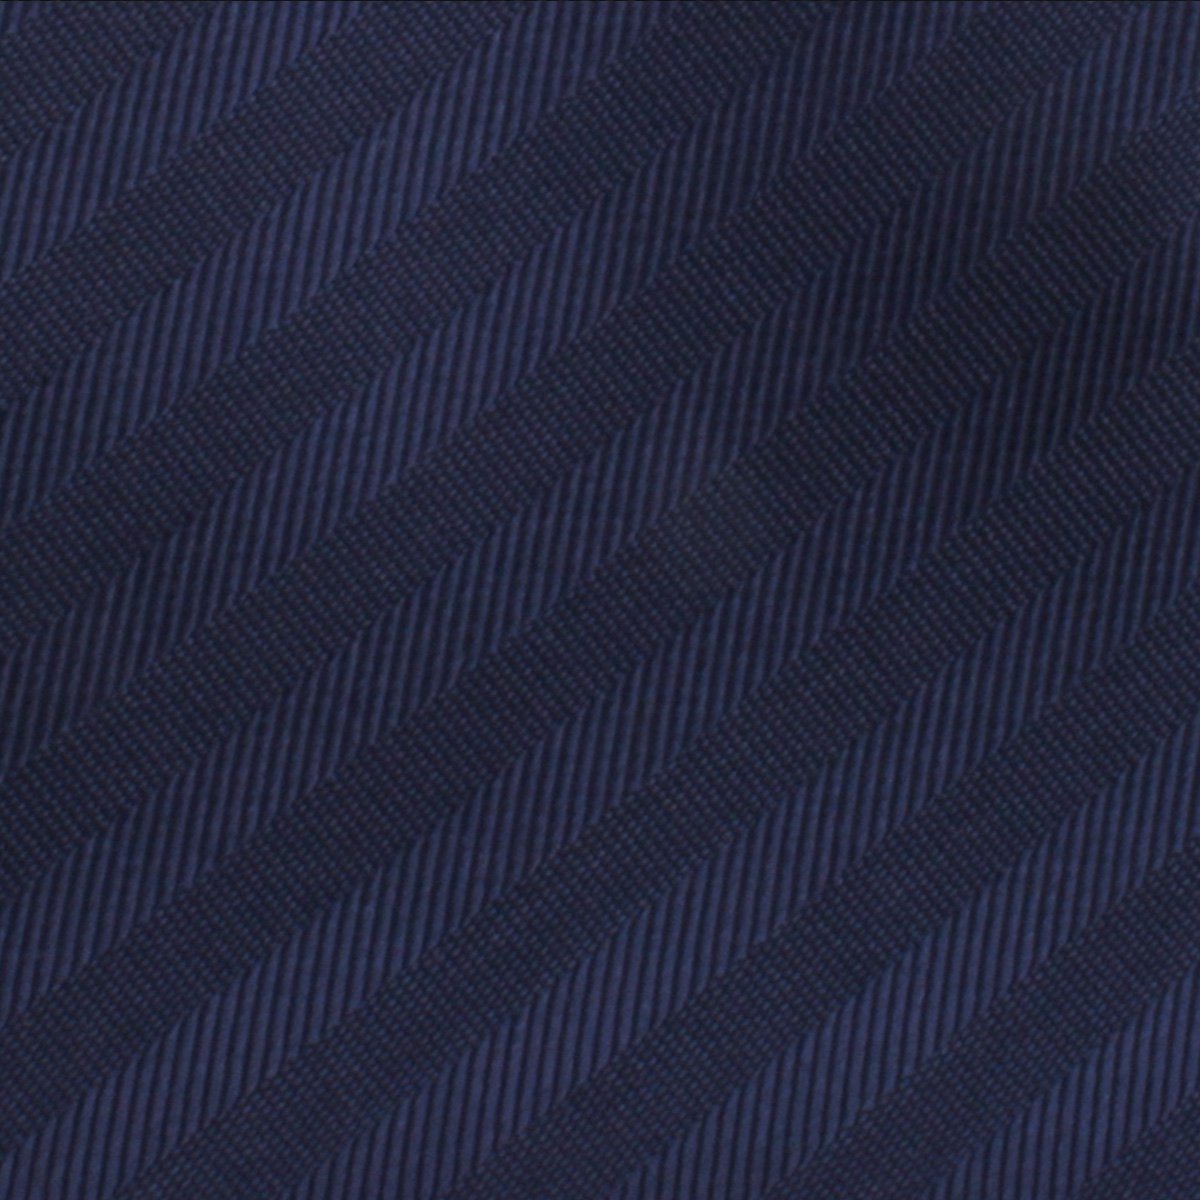 Venice Navy Blue Striped Necktie Fabric